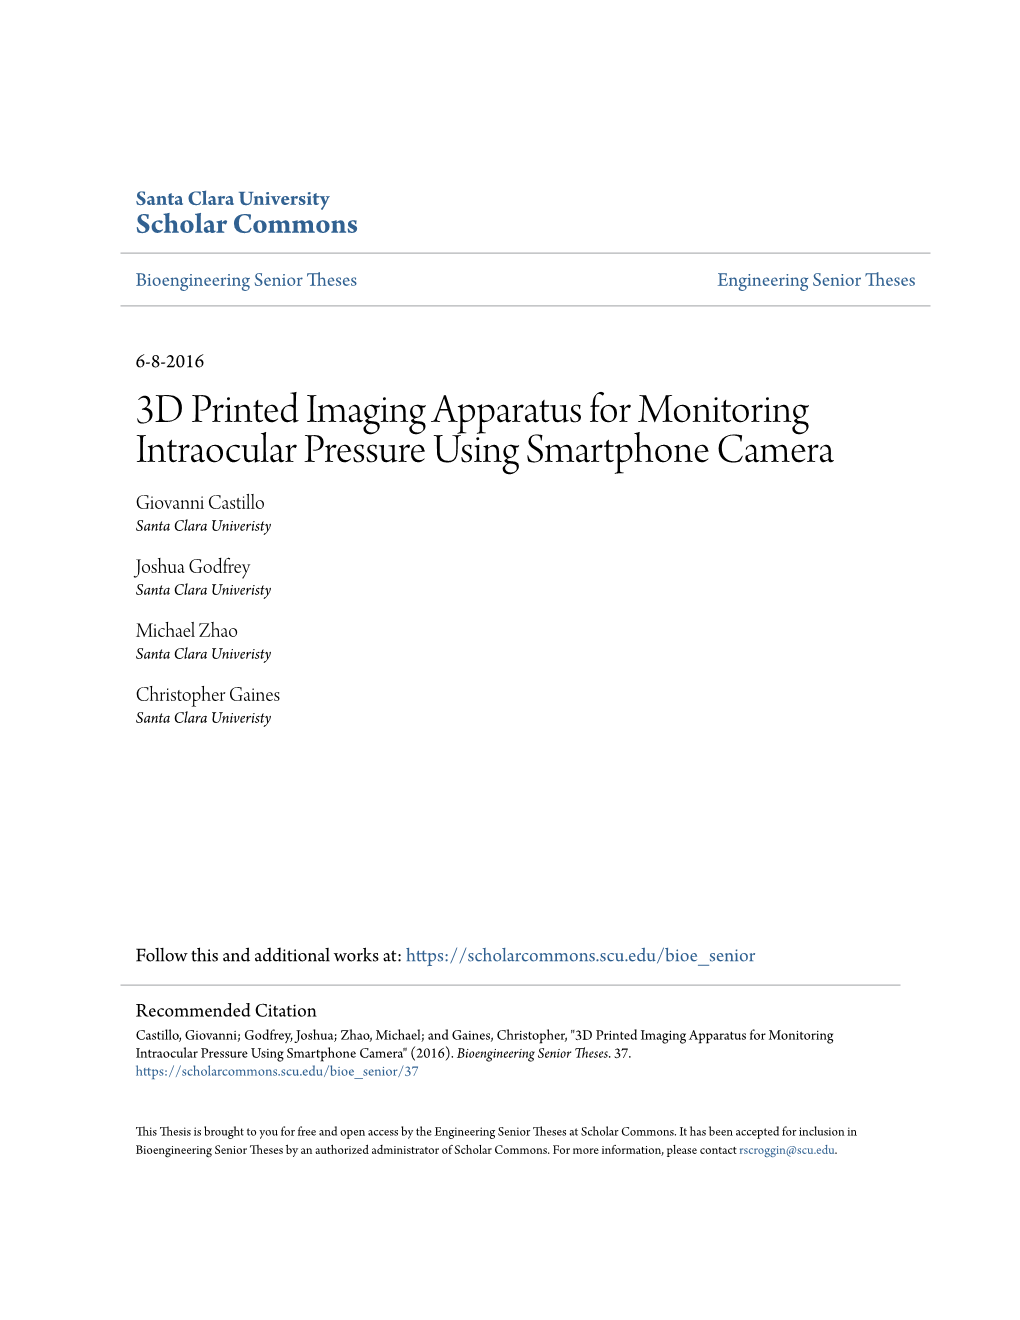 3D Printed Imaging Apparatus for Monitoring Intraocular Pressure Using Smartphone Camera Giovanni Castillo Santa Clara Univeristy